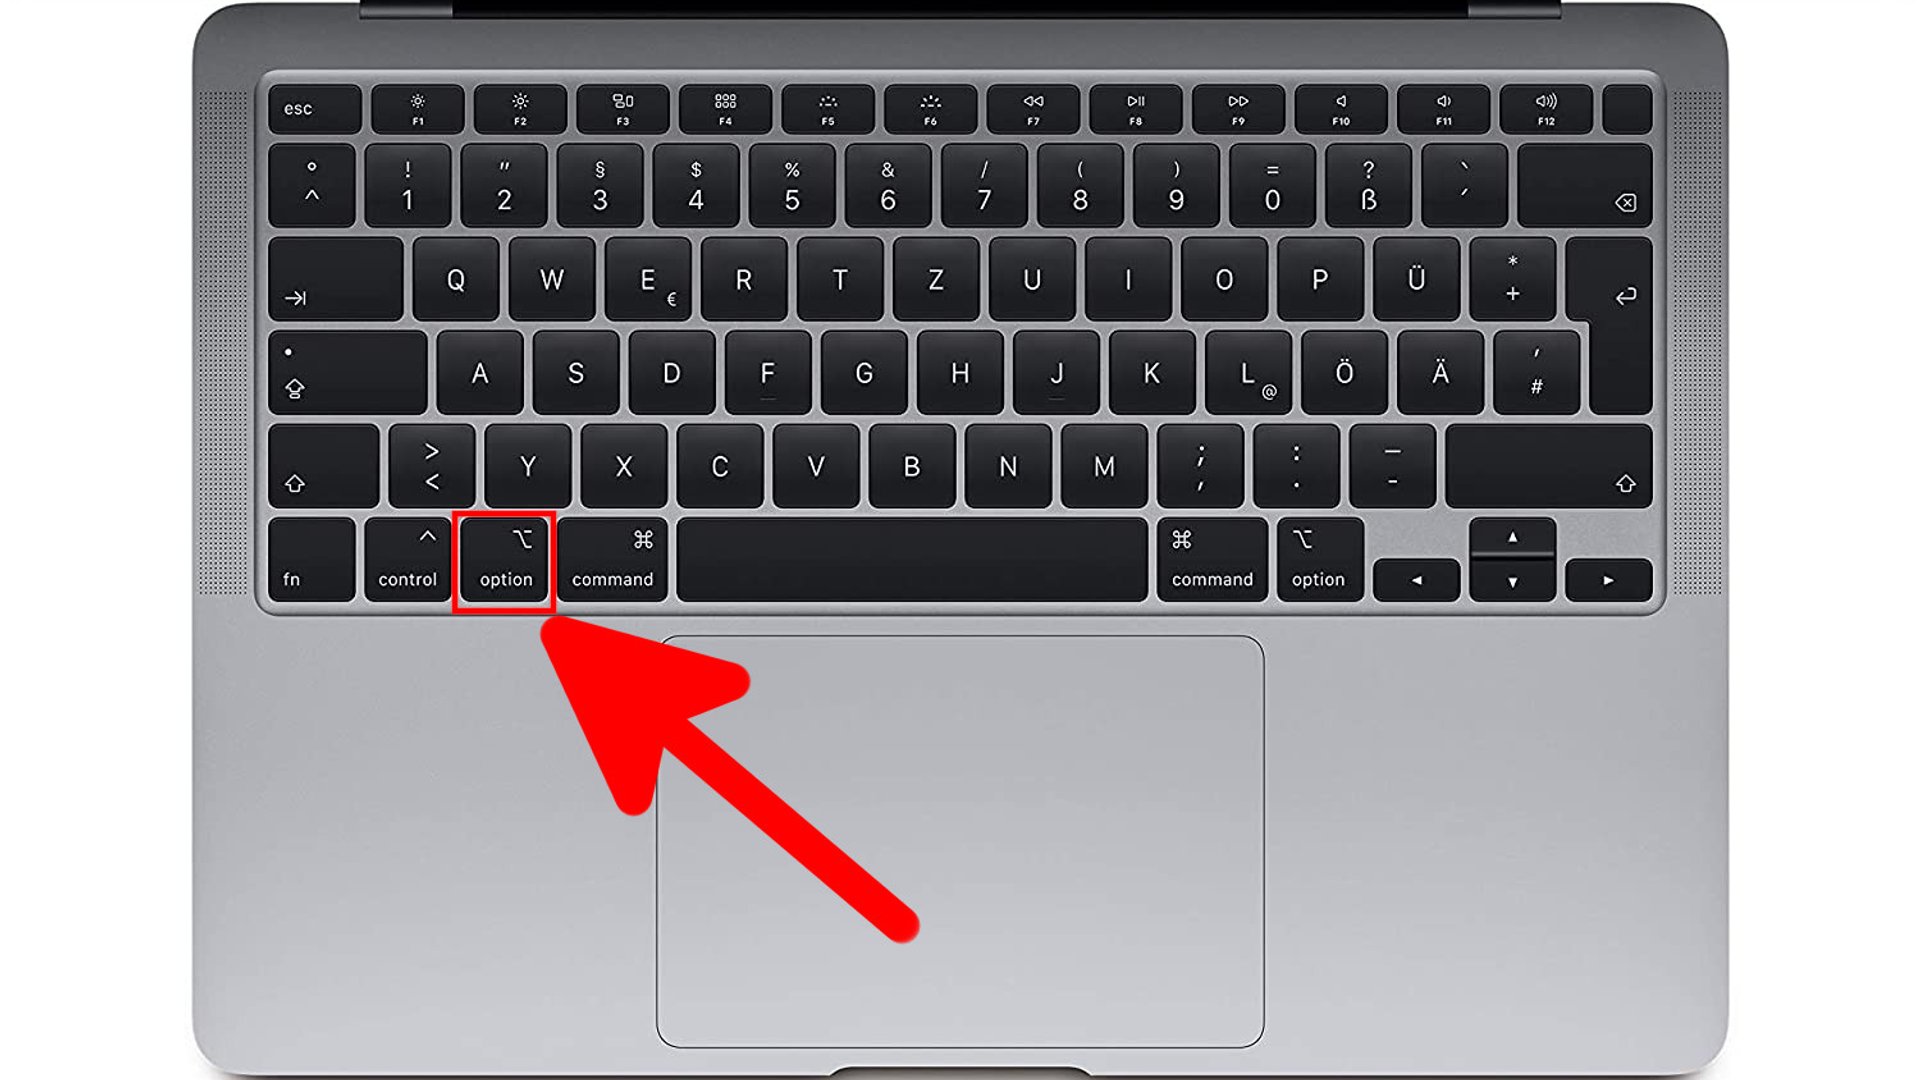 Alt option. Shift + Control + option (alt). Макбук. Макбук кнопка оптион. Альт шифт на макбуке. Кнопка option на Mac.